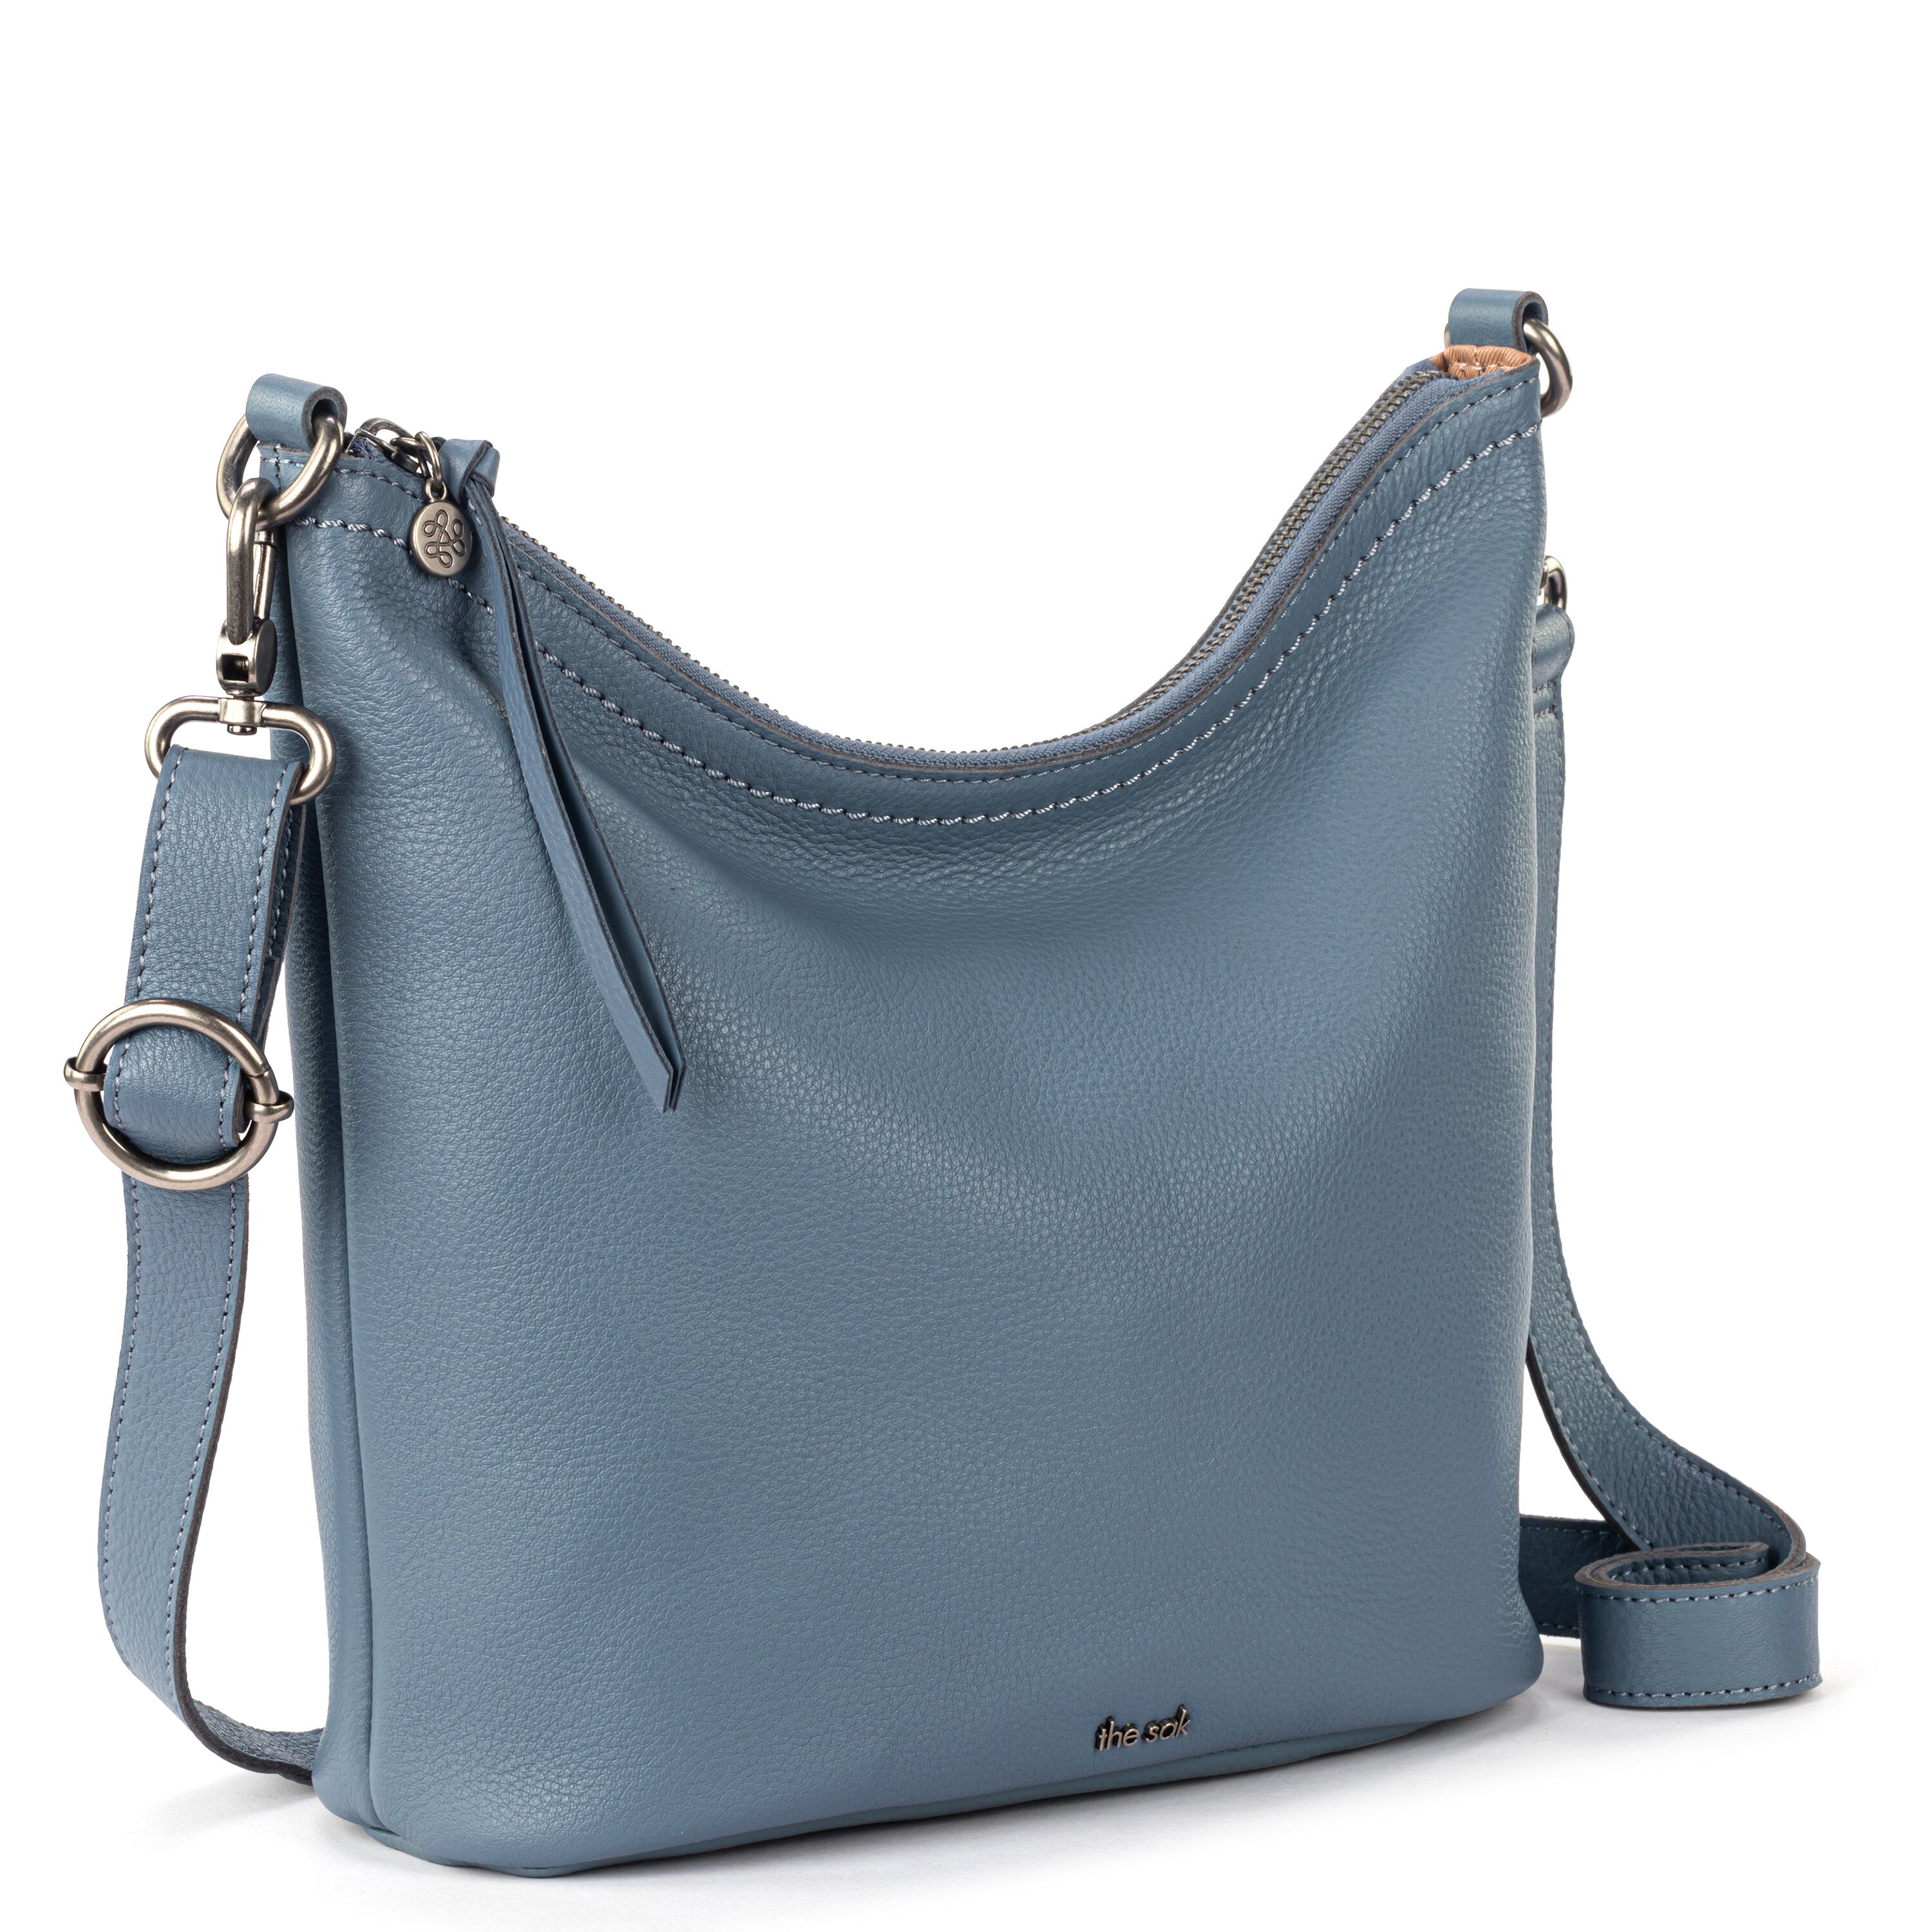 New The Sak Lucia Crossbody Shoulder Bag Handbag Purse Slate | eBay